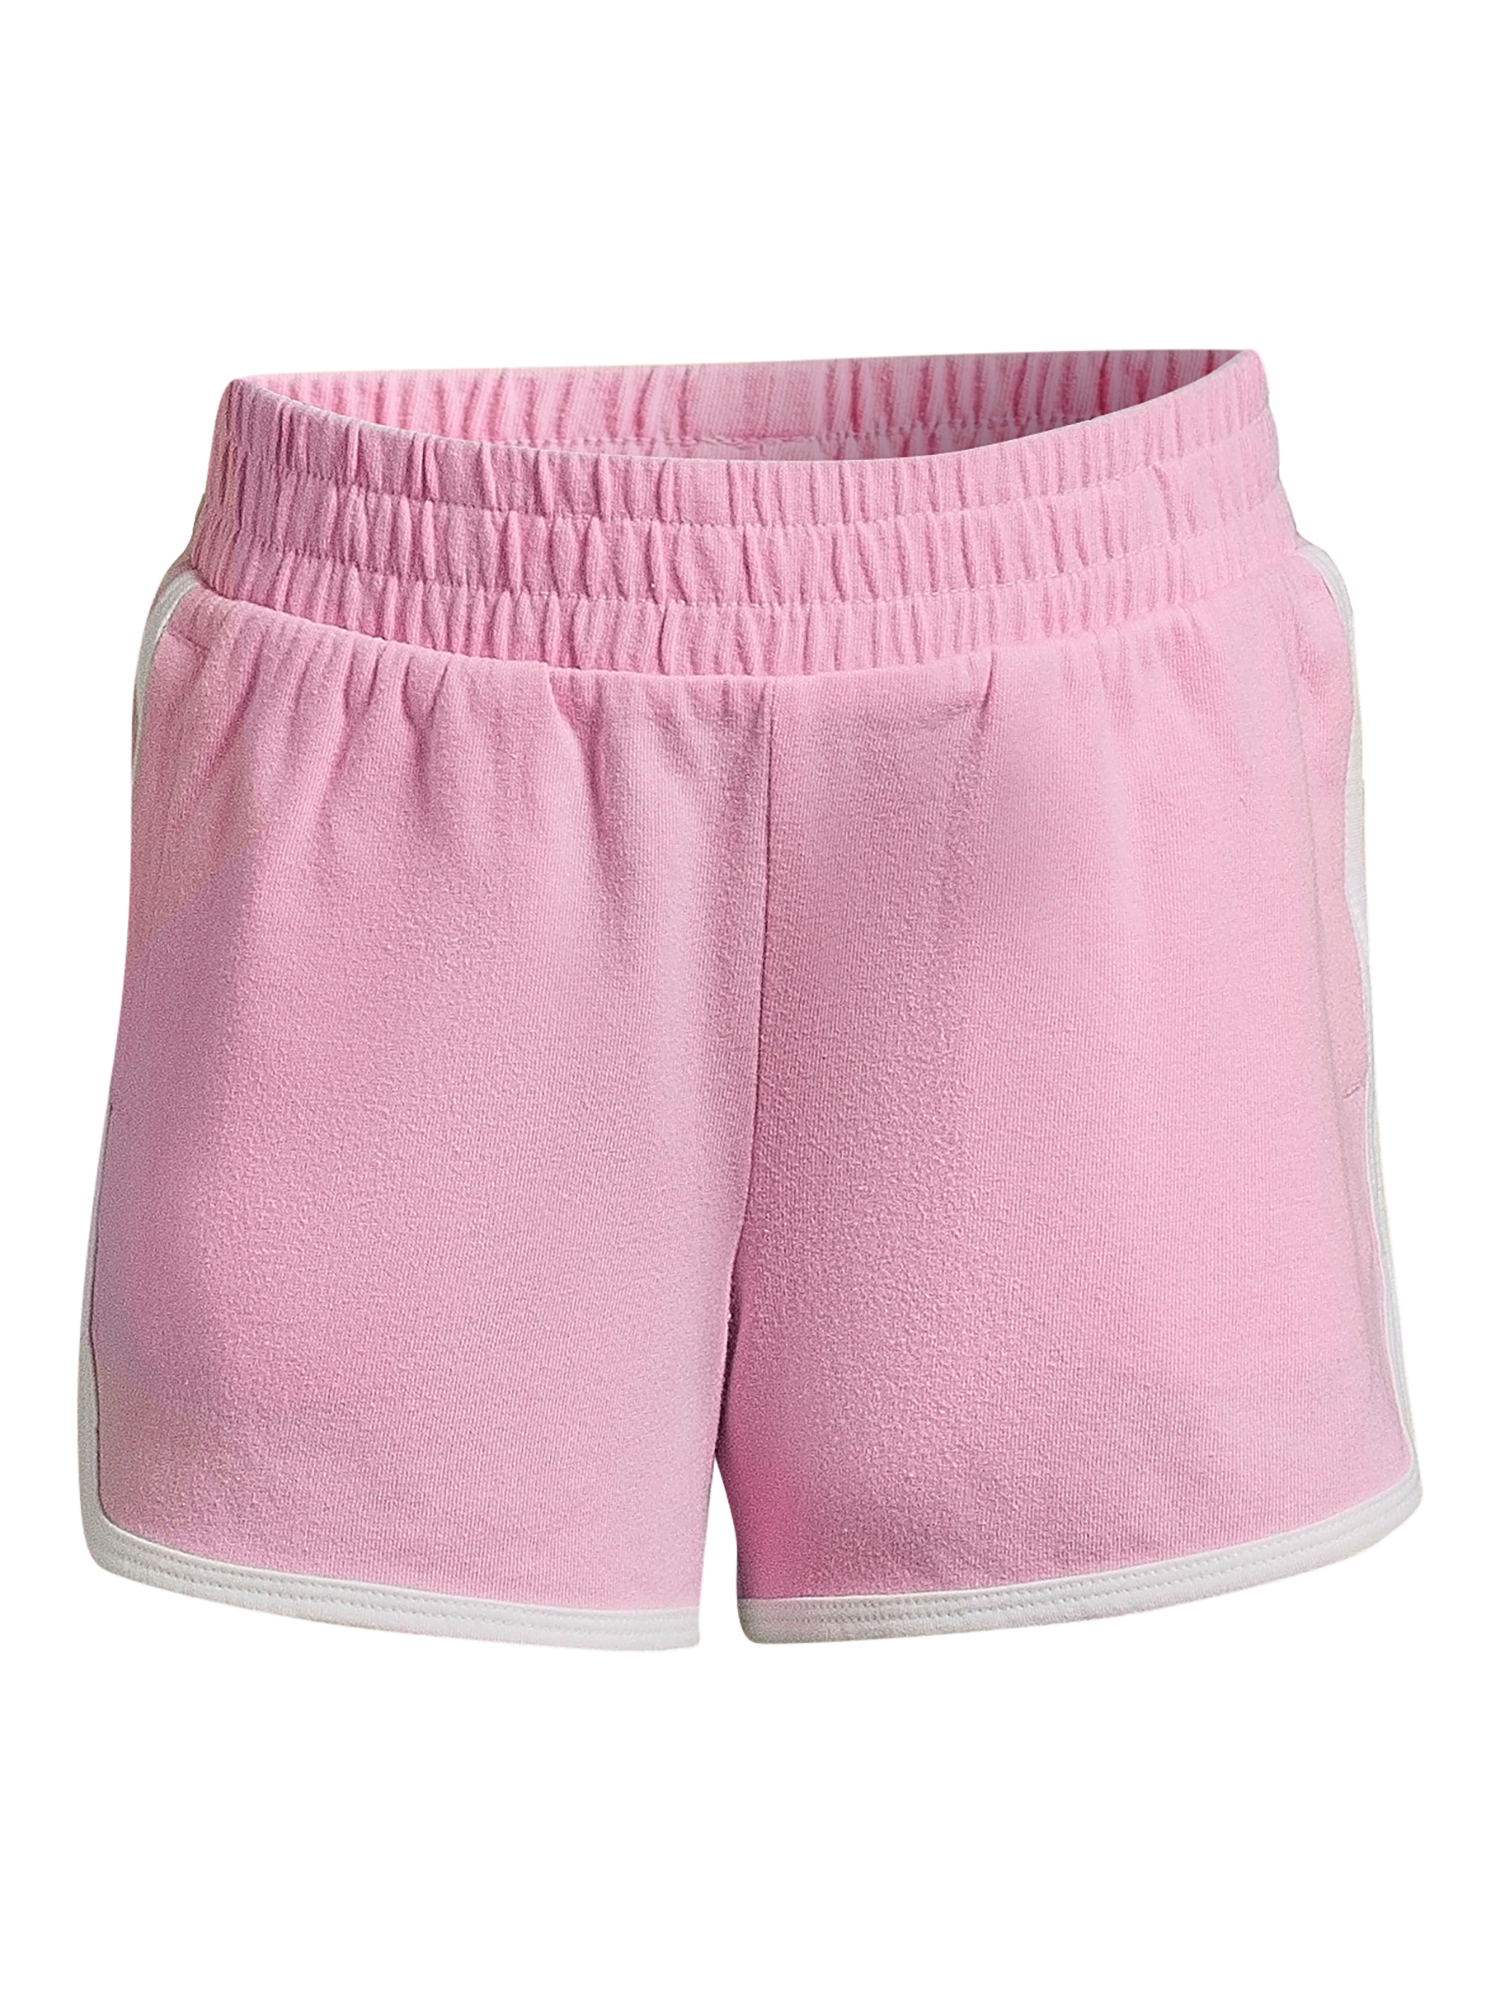 Wonder Nation Girls’ Jersey Dolphin Shorts, Sizes XS-XL & Plus - image 5 of 5